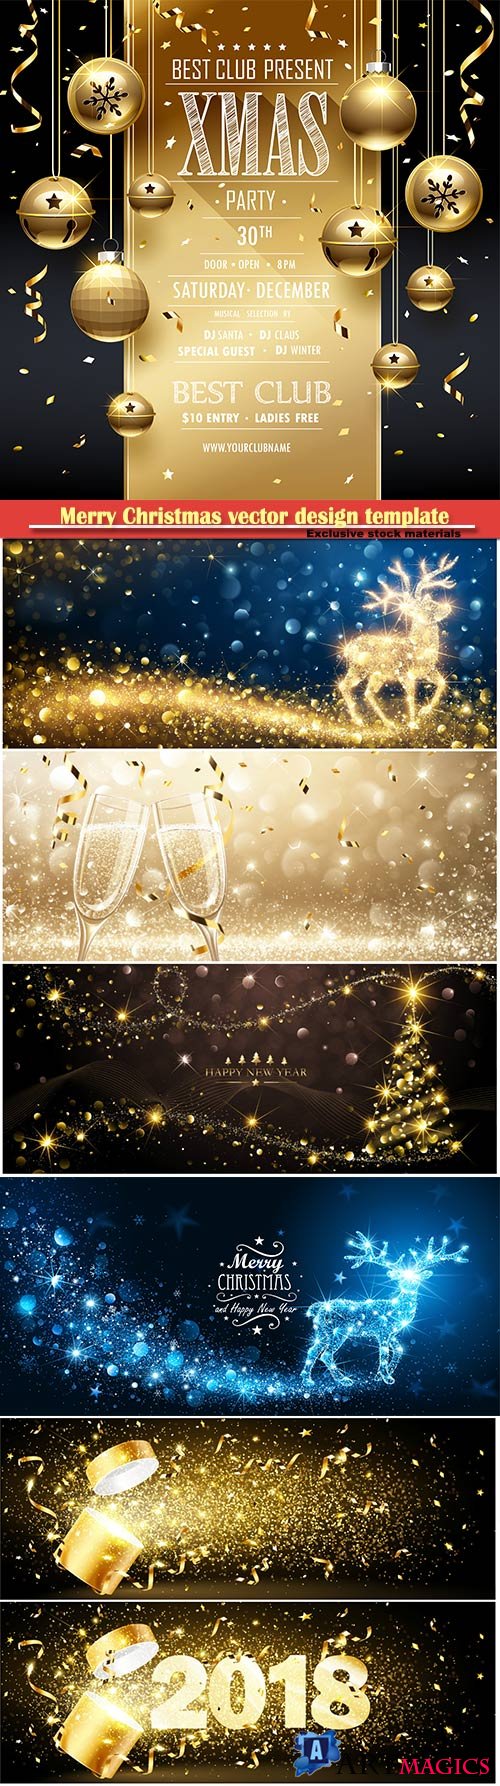 Merry Christmas vector golden design template